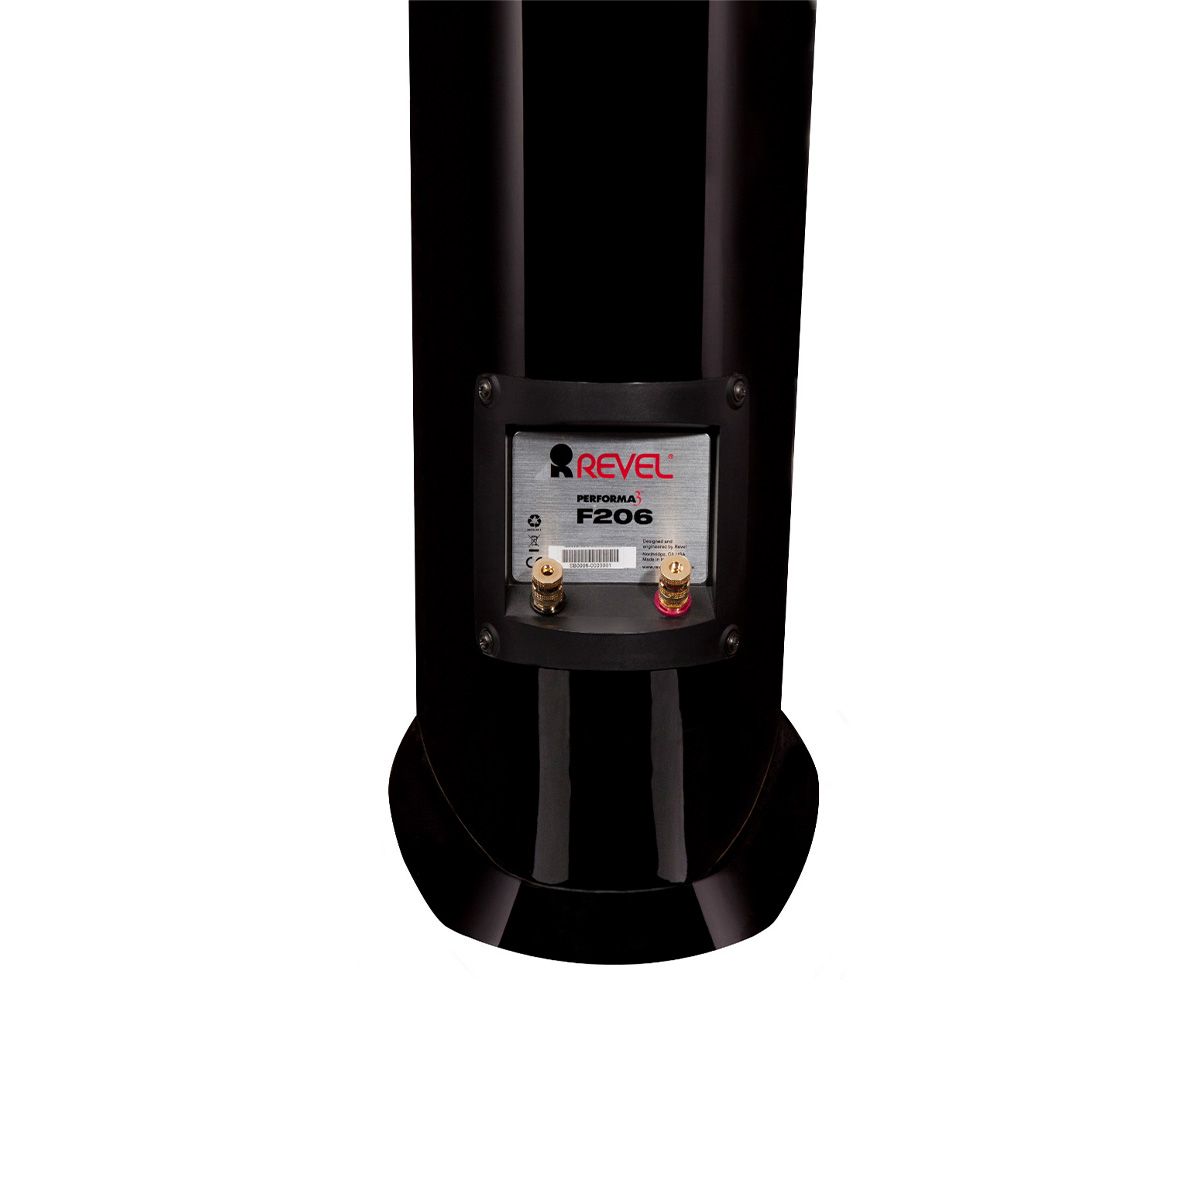 Revel F206 3-Way Floorstanding Tower Loudspeaker - Black single - zoomed rear view